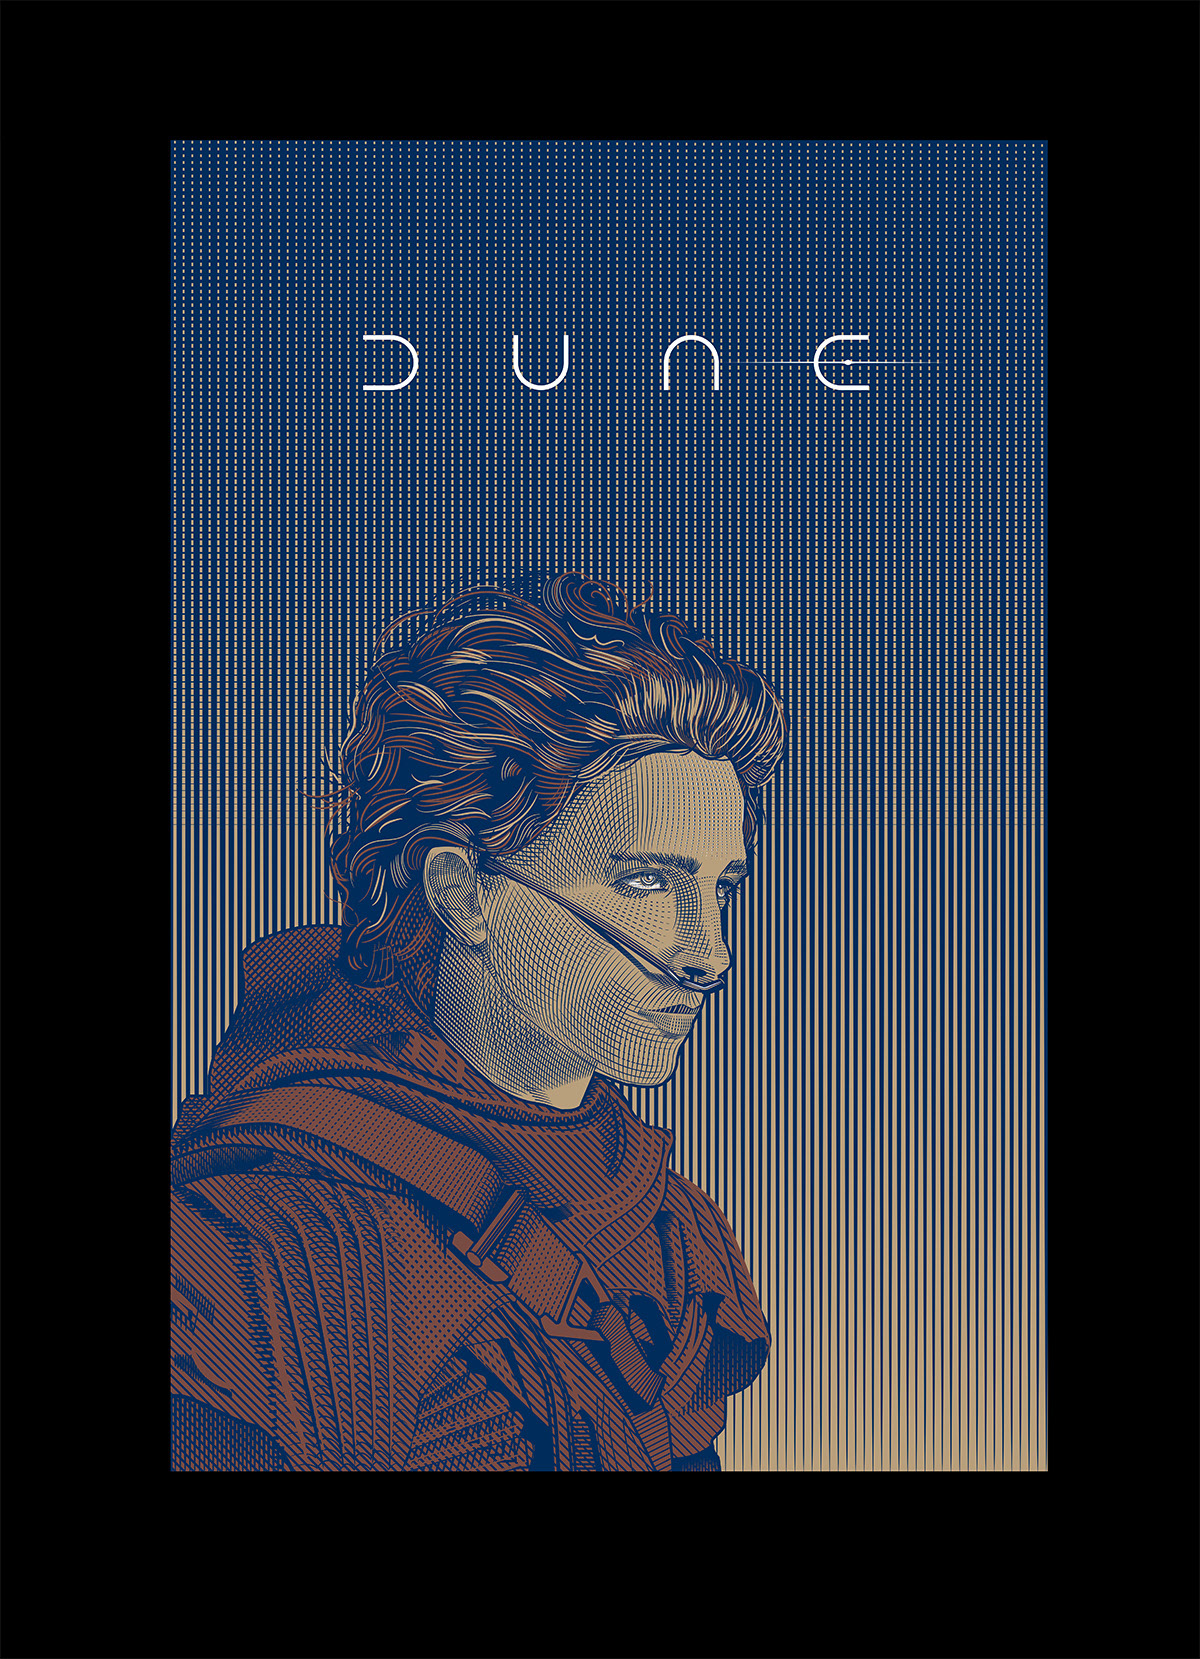 Dune Movie Poster Displate